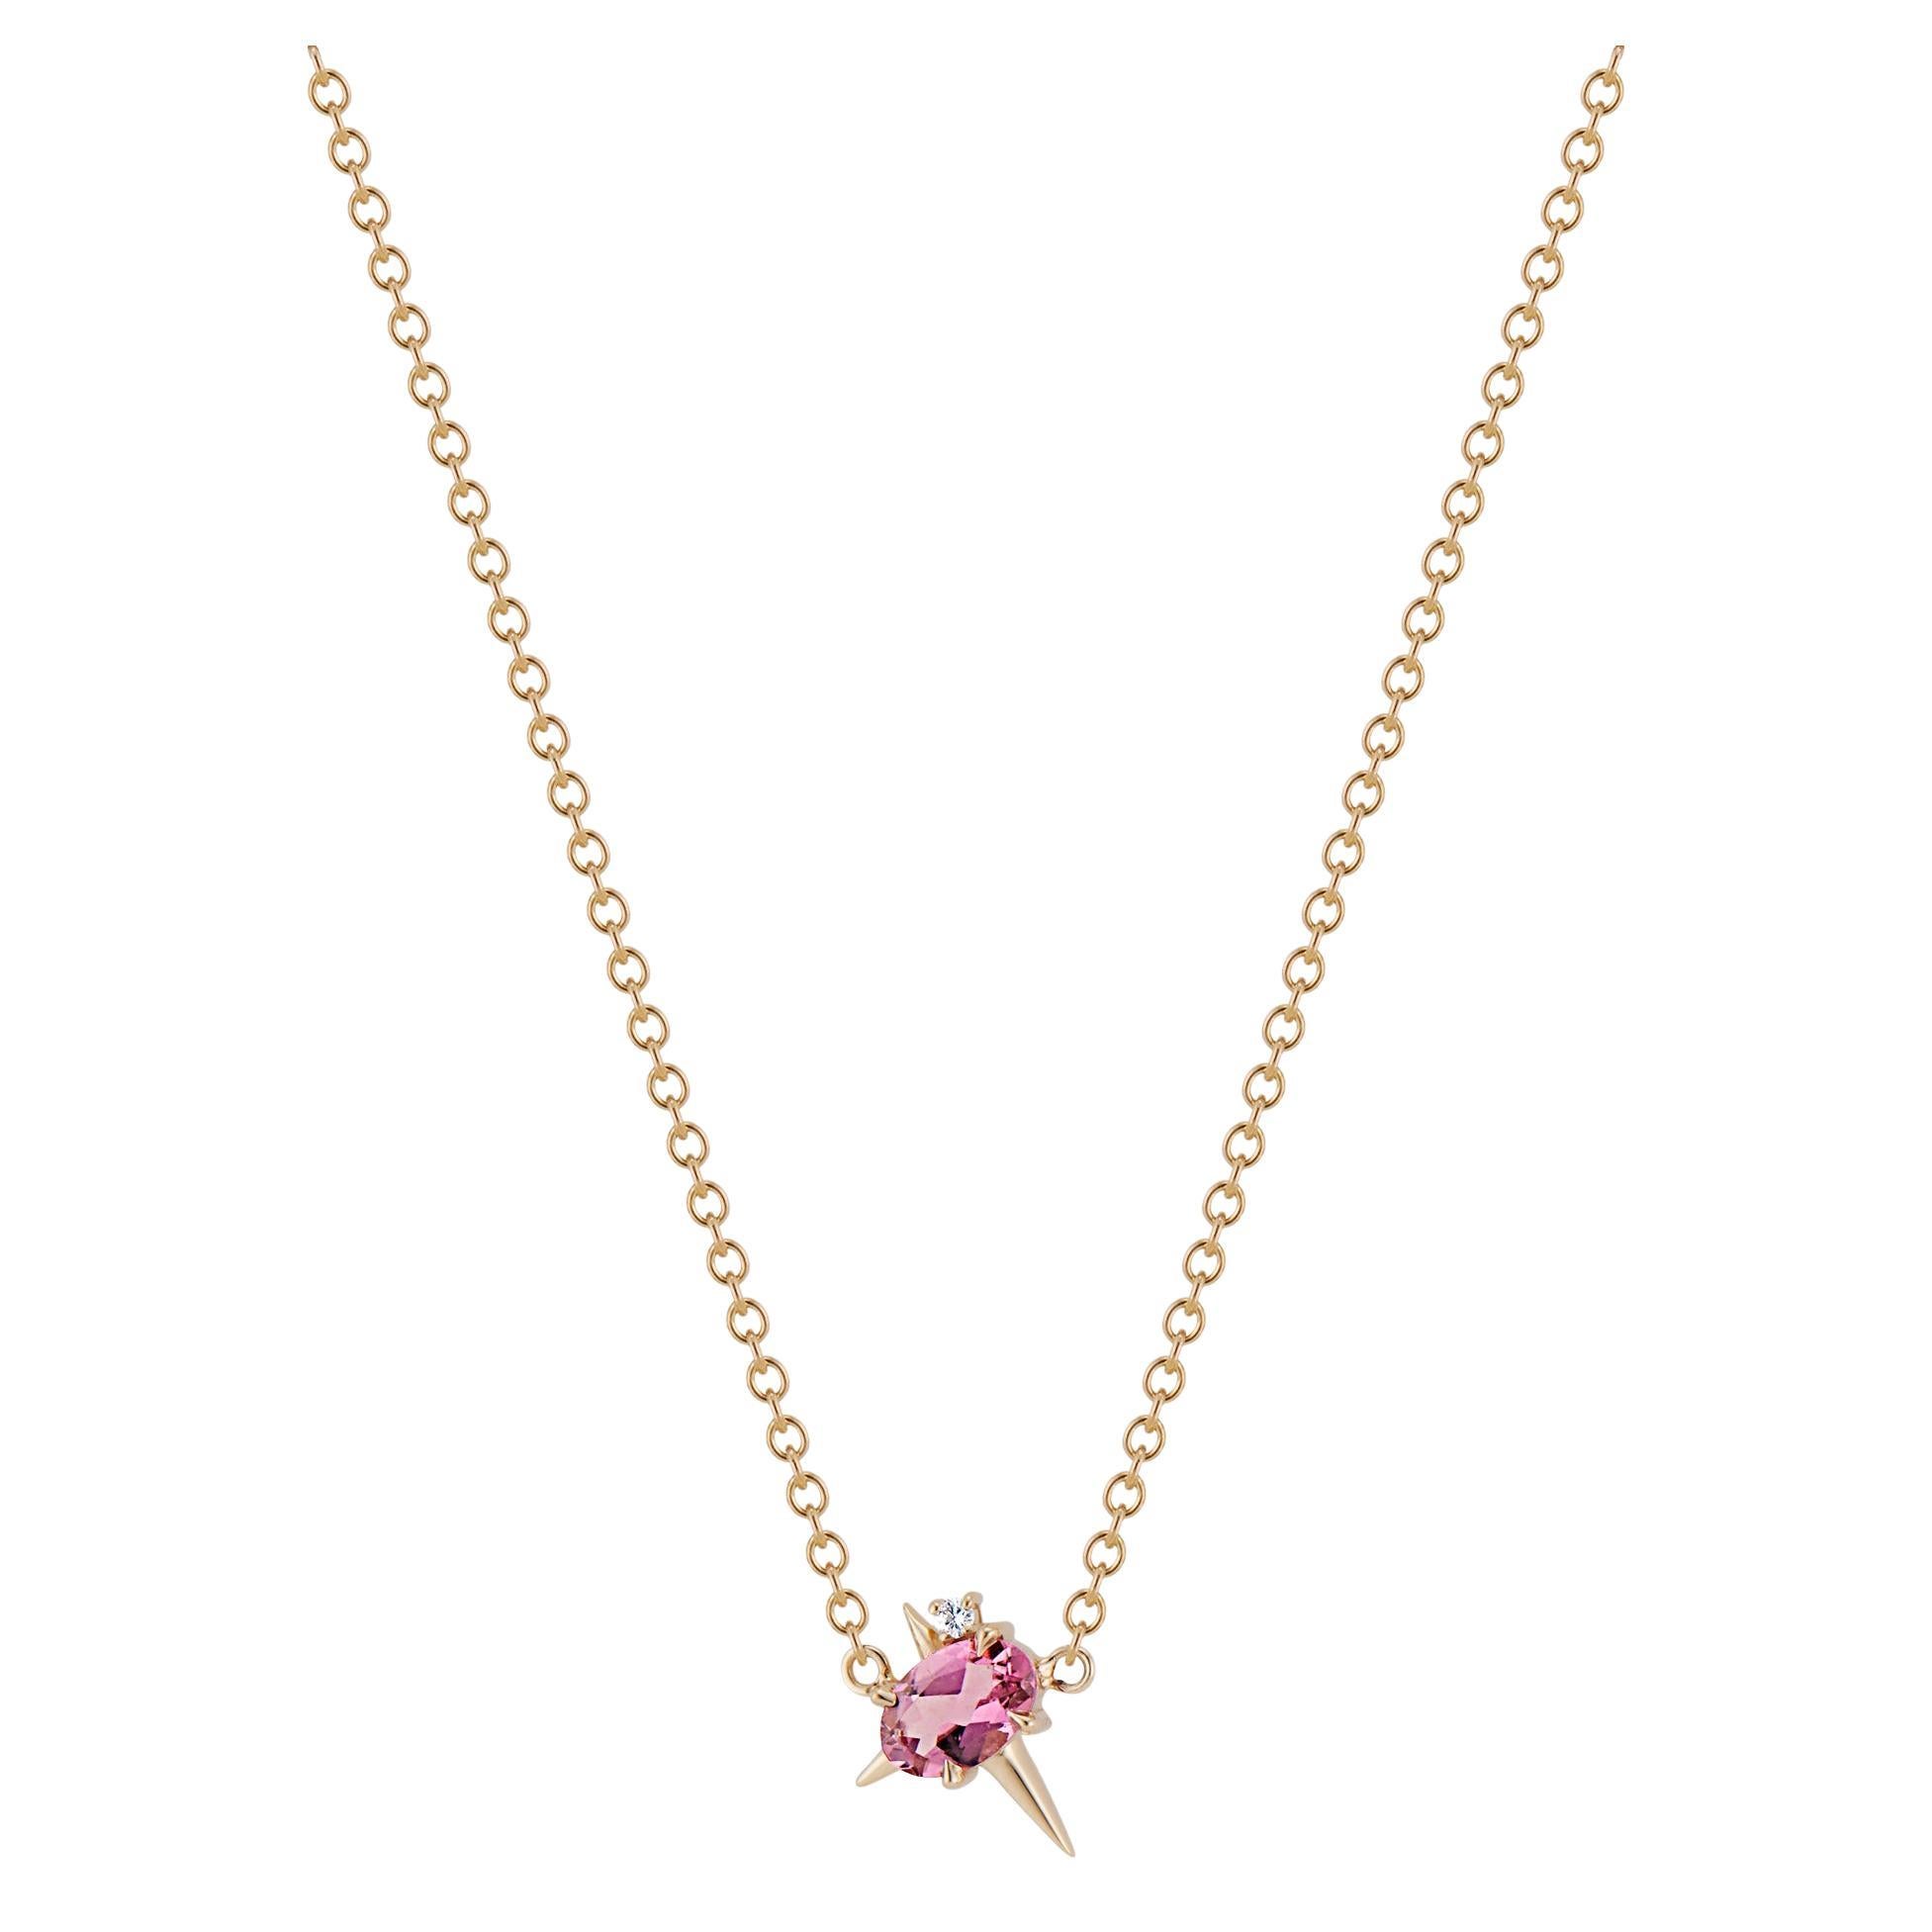 14ct Yellow Gold Oval Pink Tourmaline & Diamond Spike Necklace